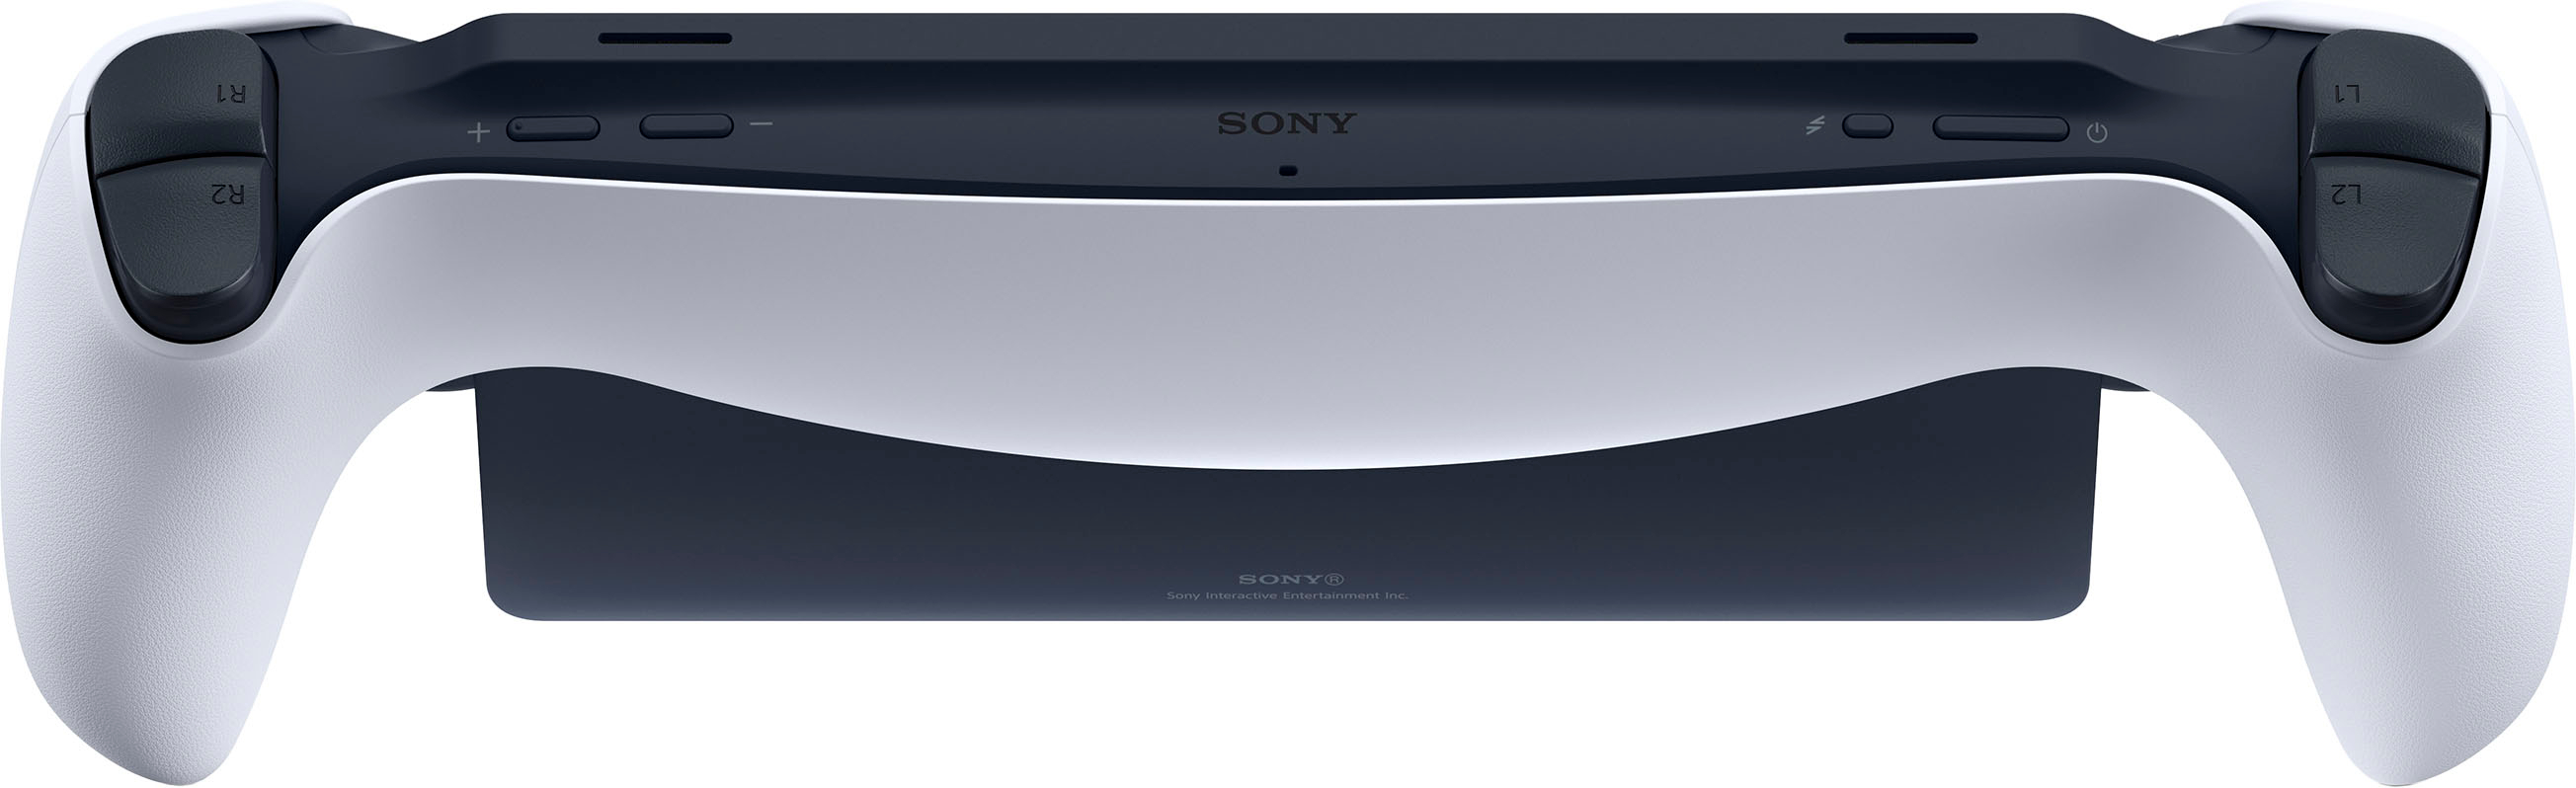 New Sony PlayStation Portal Remote Player